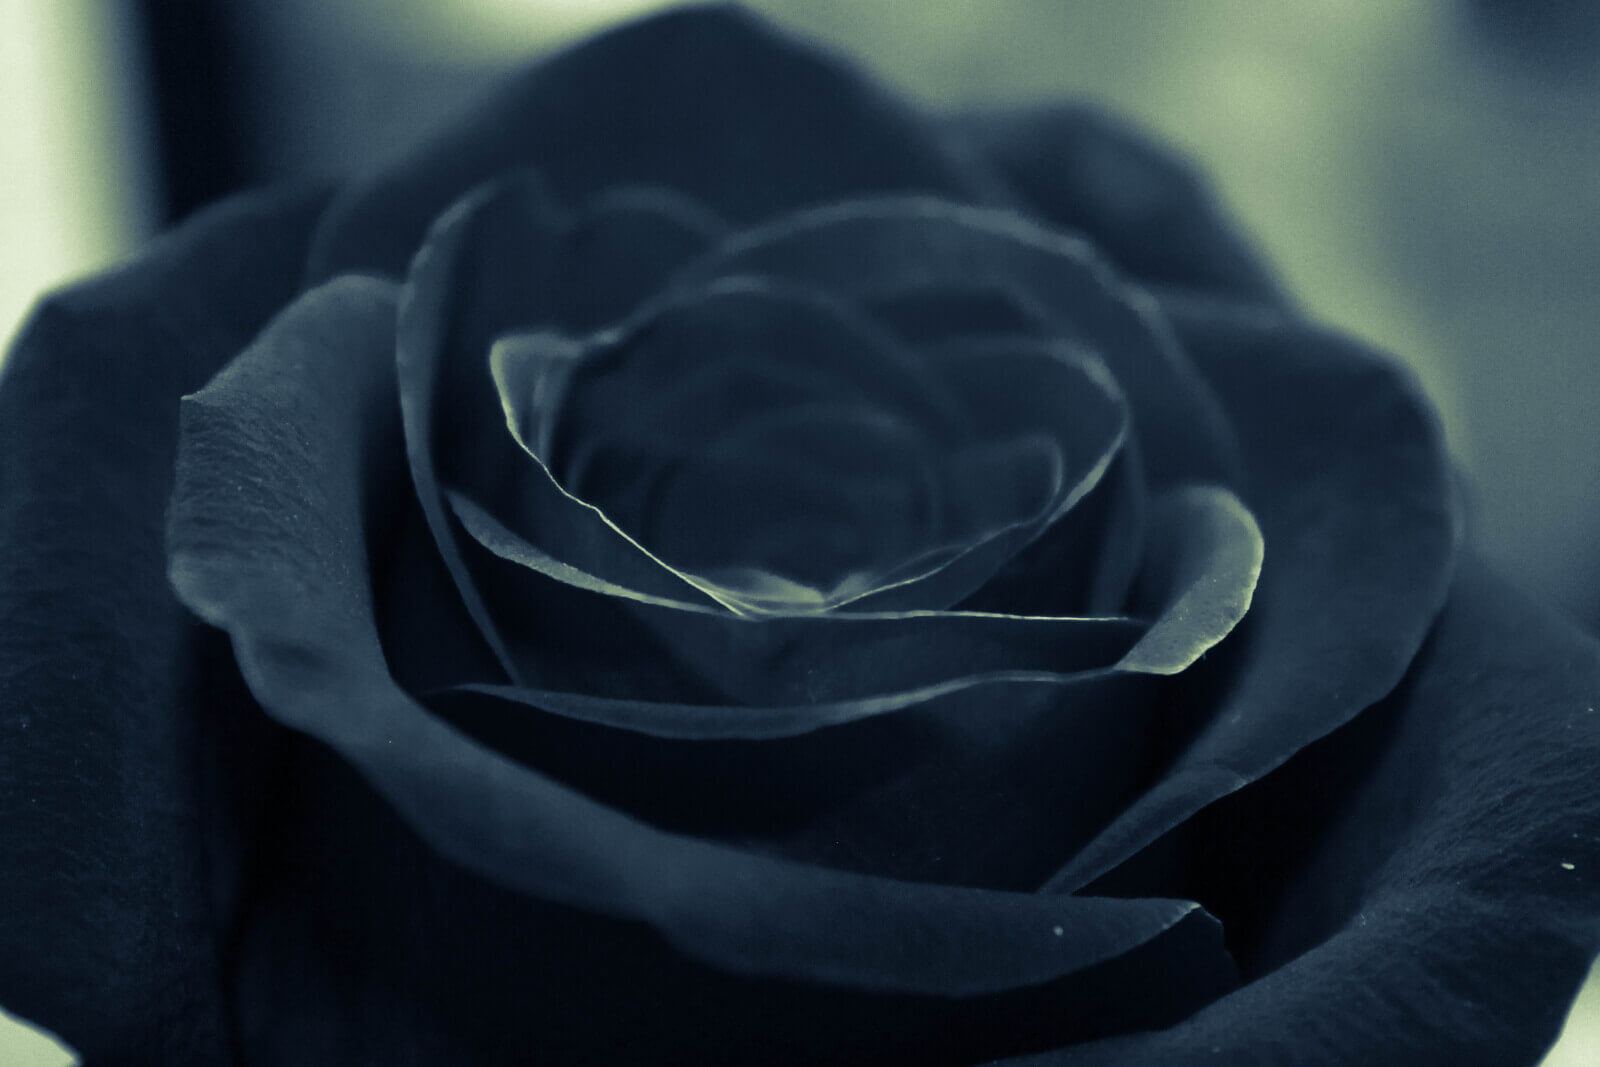 Black rose meaning